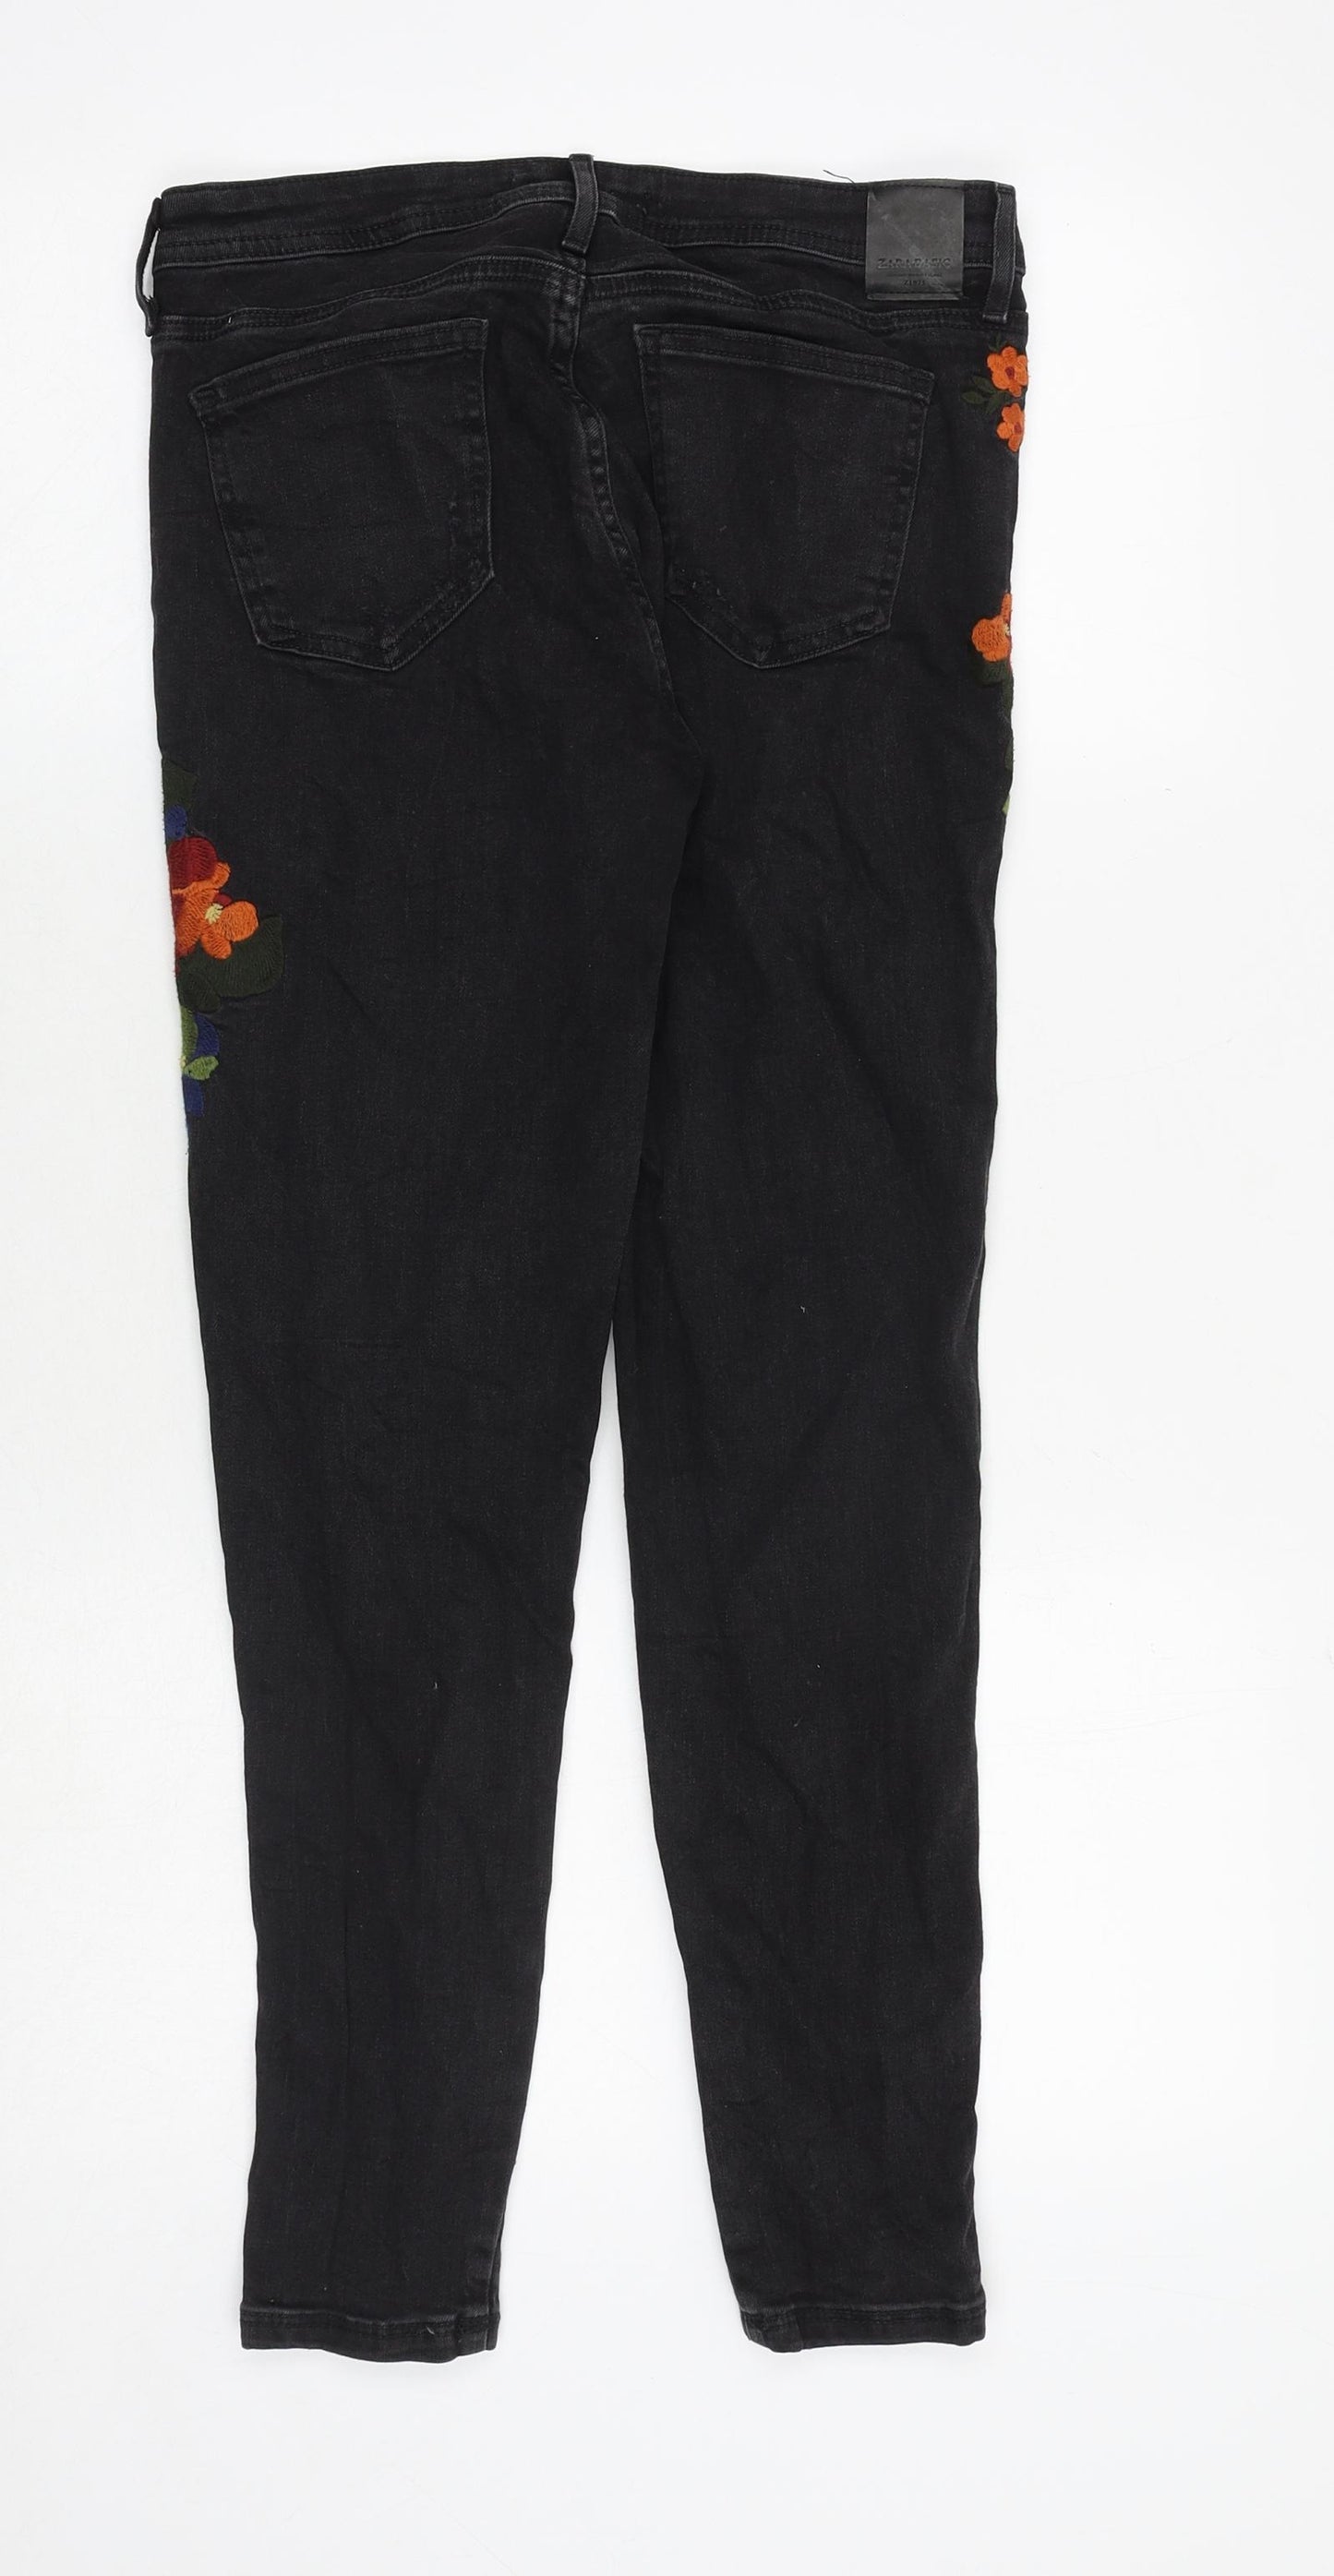 Zara Womens Black Cotton Skinny Jeans Size 10 Regular Zip